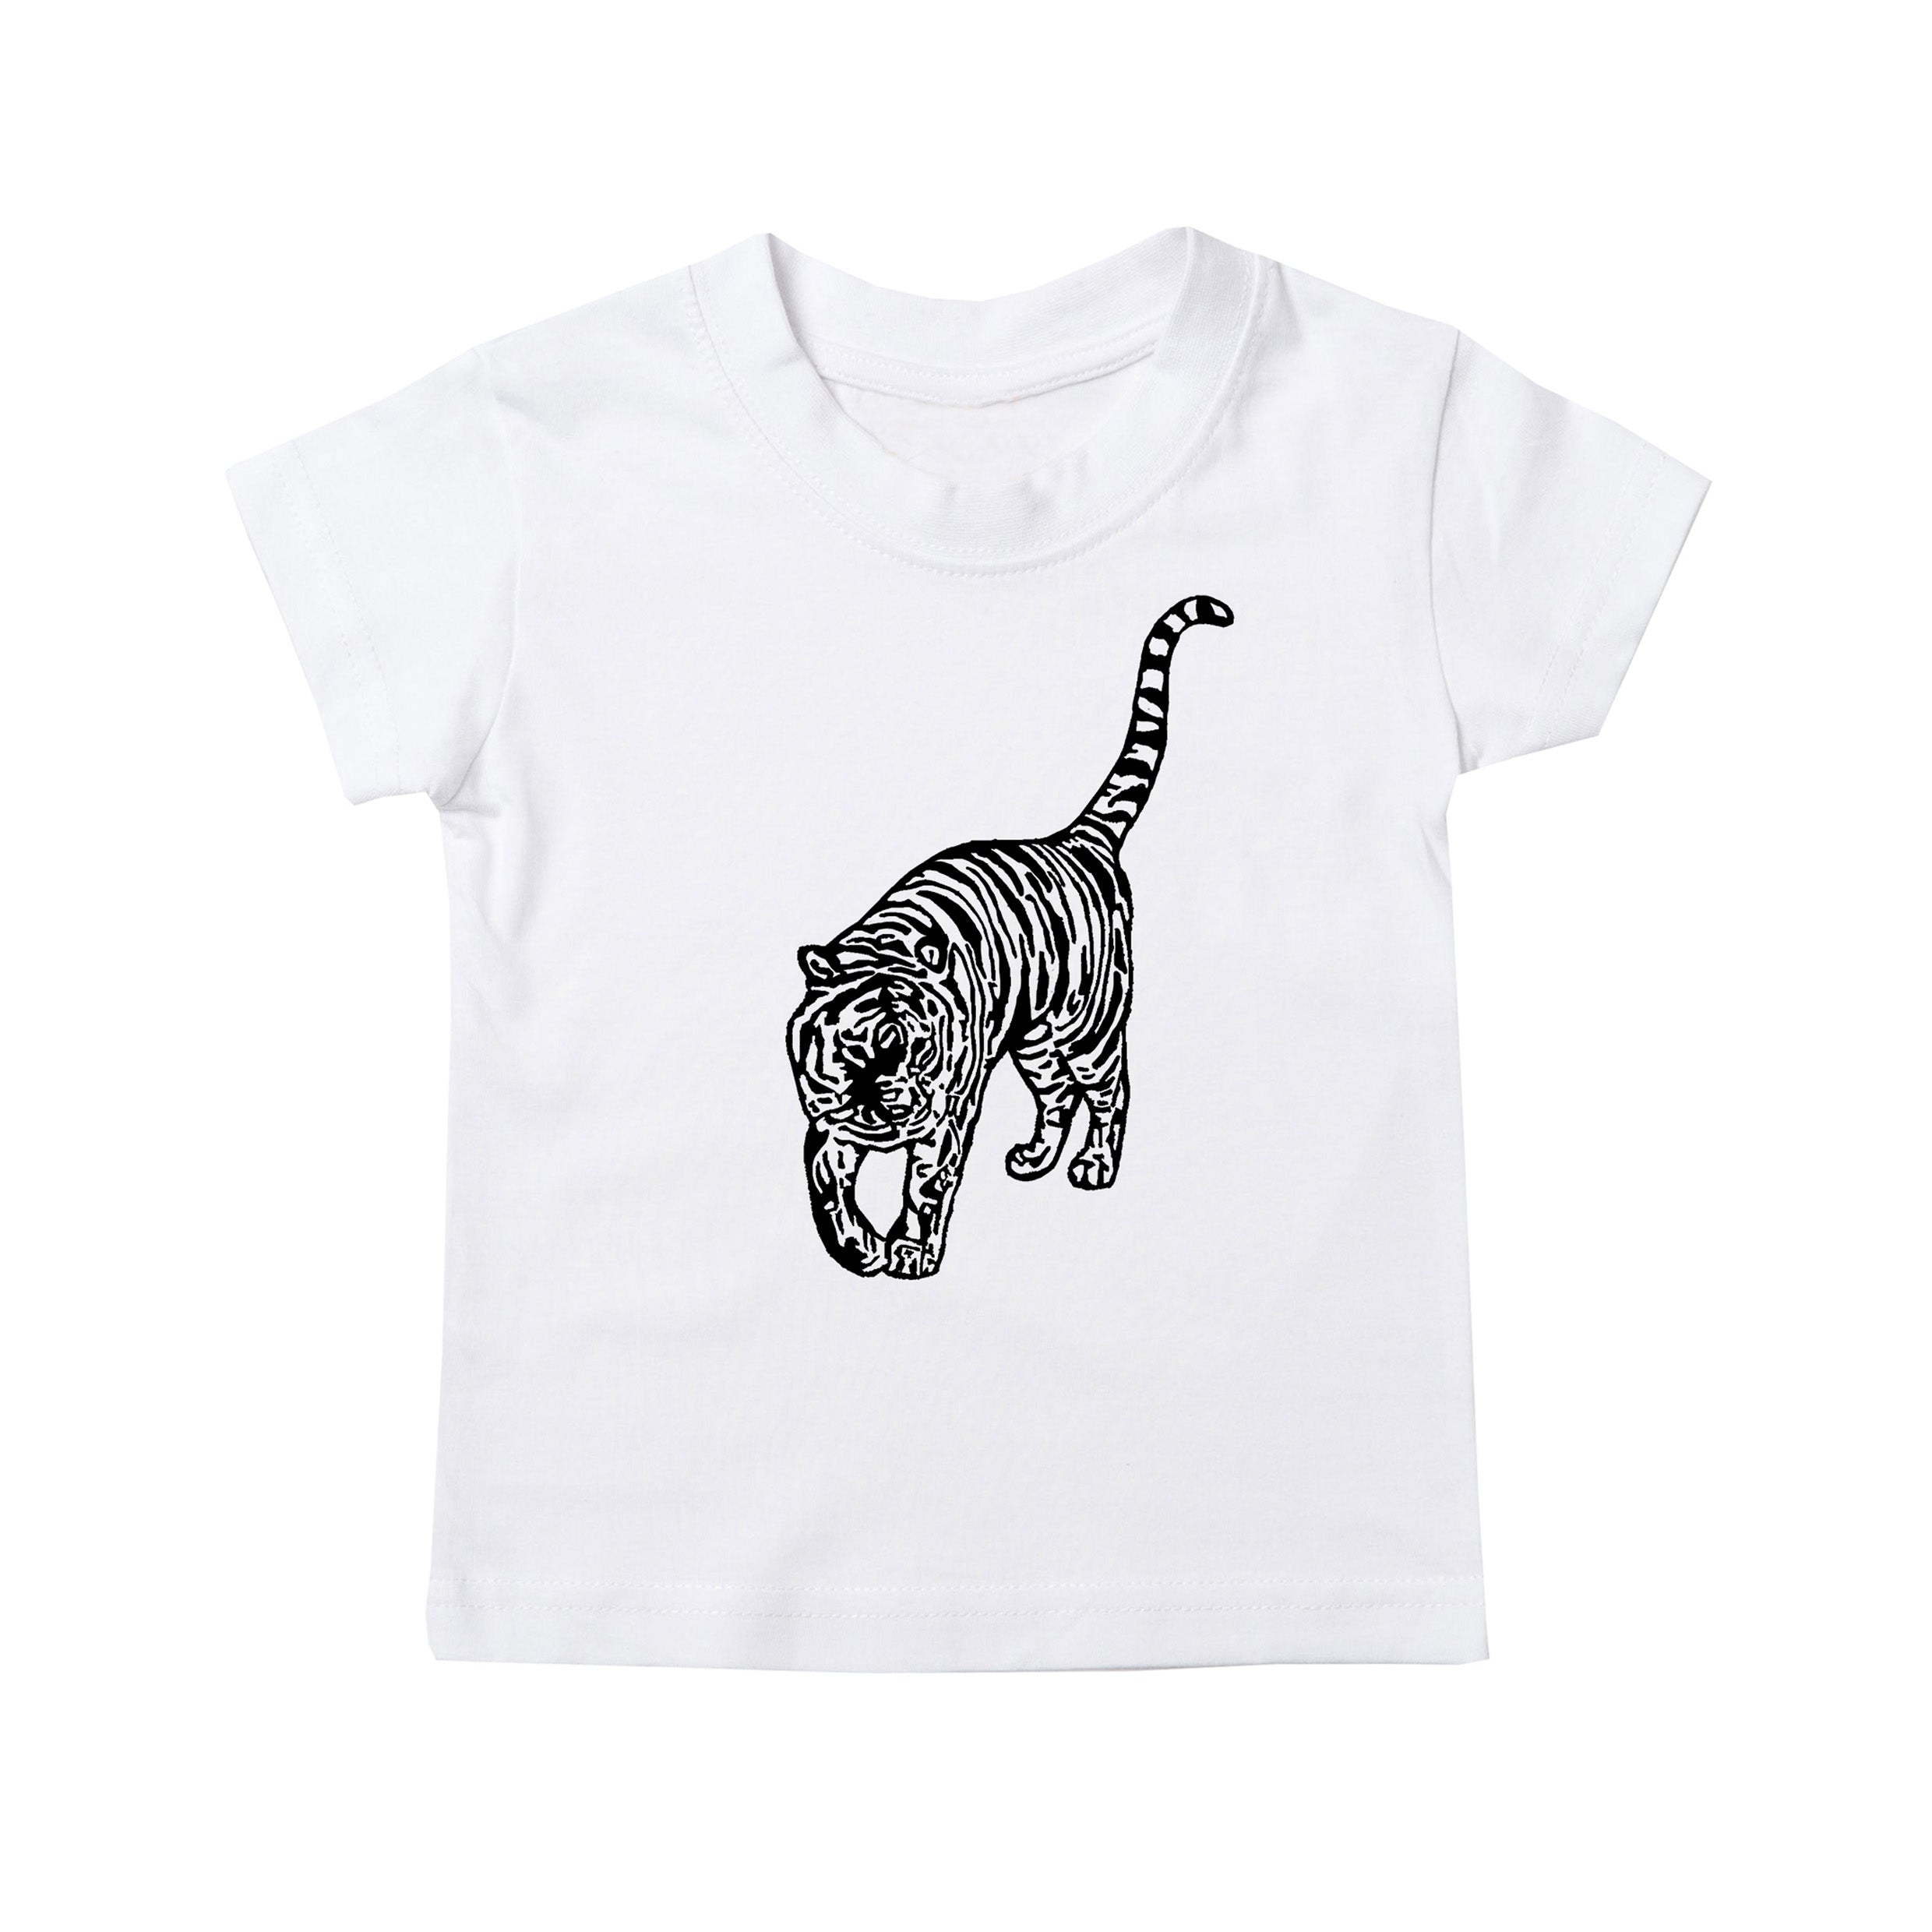 Prowling Ada Tiger - White T-Shirt Kids & – Alfred